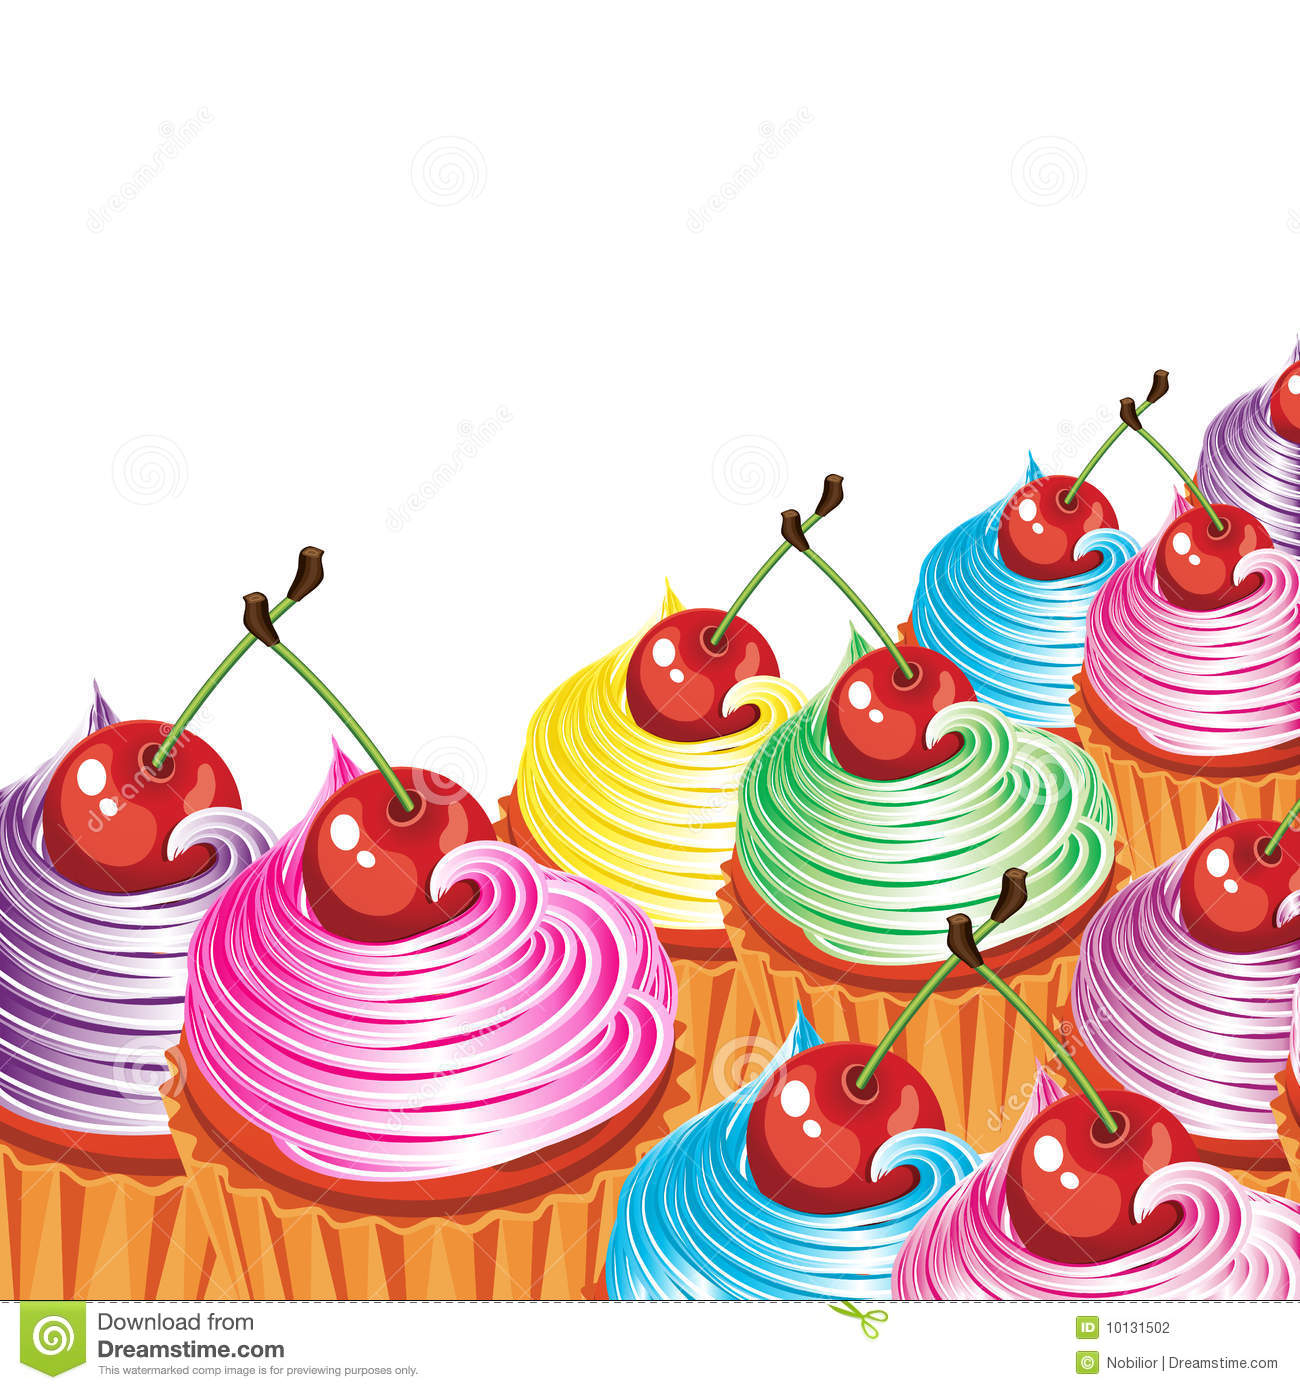 Cupcakes Clipart Border Border Cakes Cream Cherries 10131502 Jpg